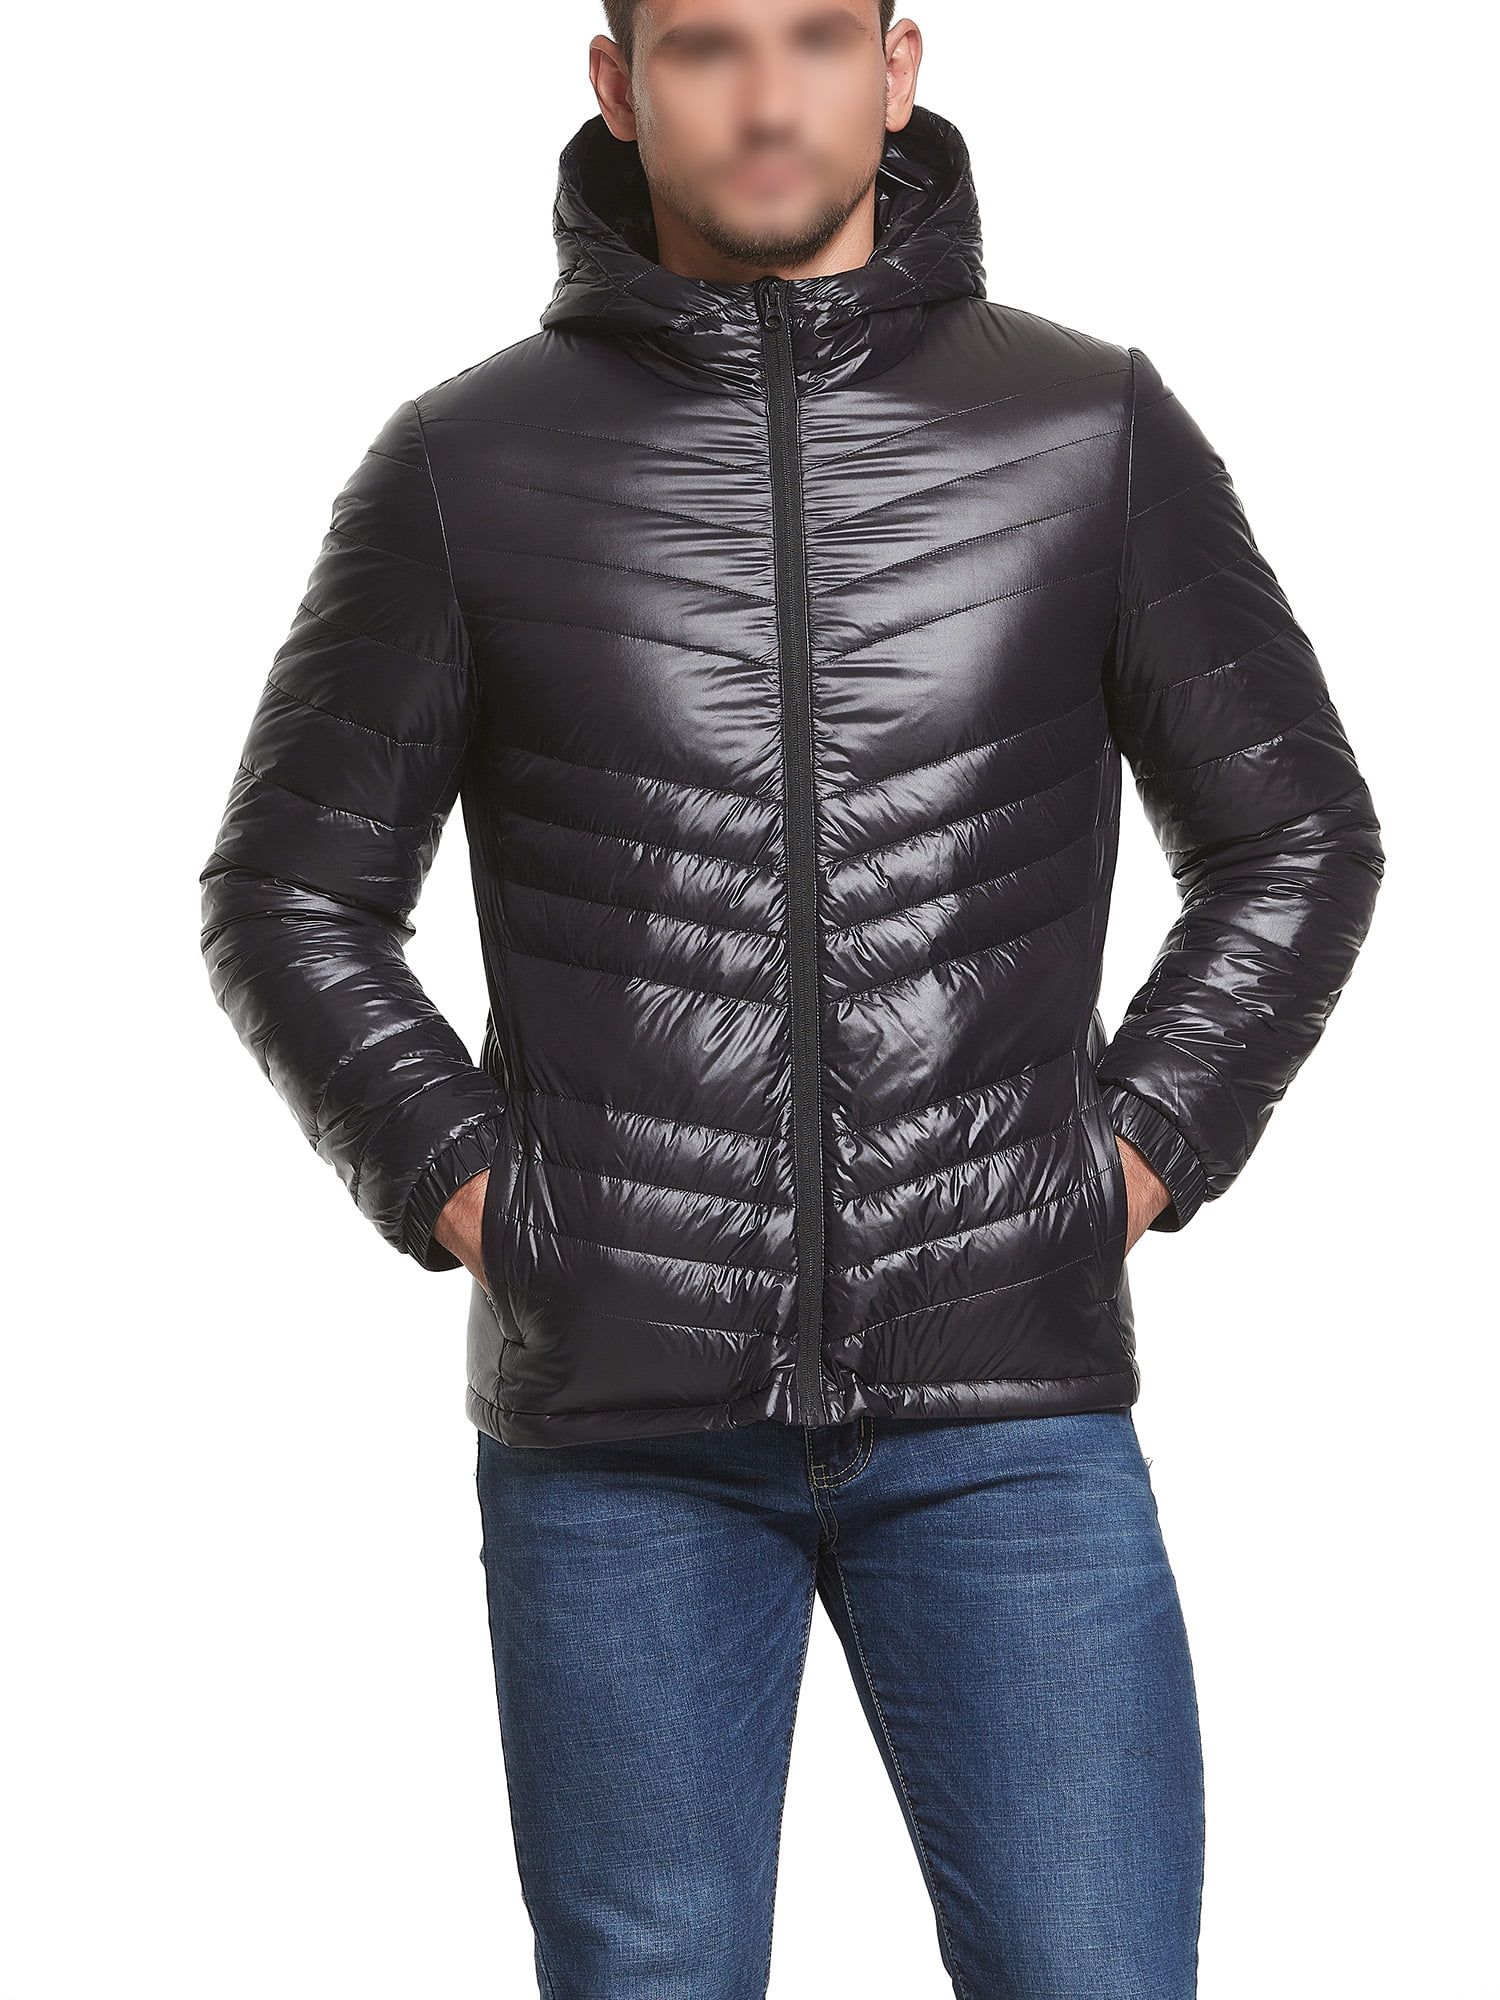 Tareas del hogar sobras retorta Men Lightweight Water-Resistant Puffer Jacket Winter Packable Hooded Down  Coat with Zipper Pockets - Walmart.com